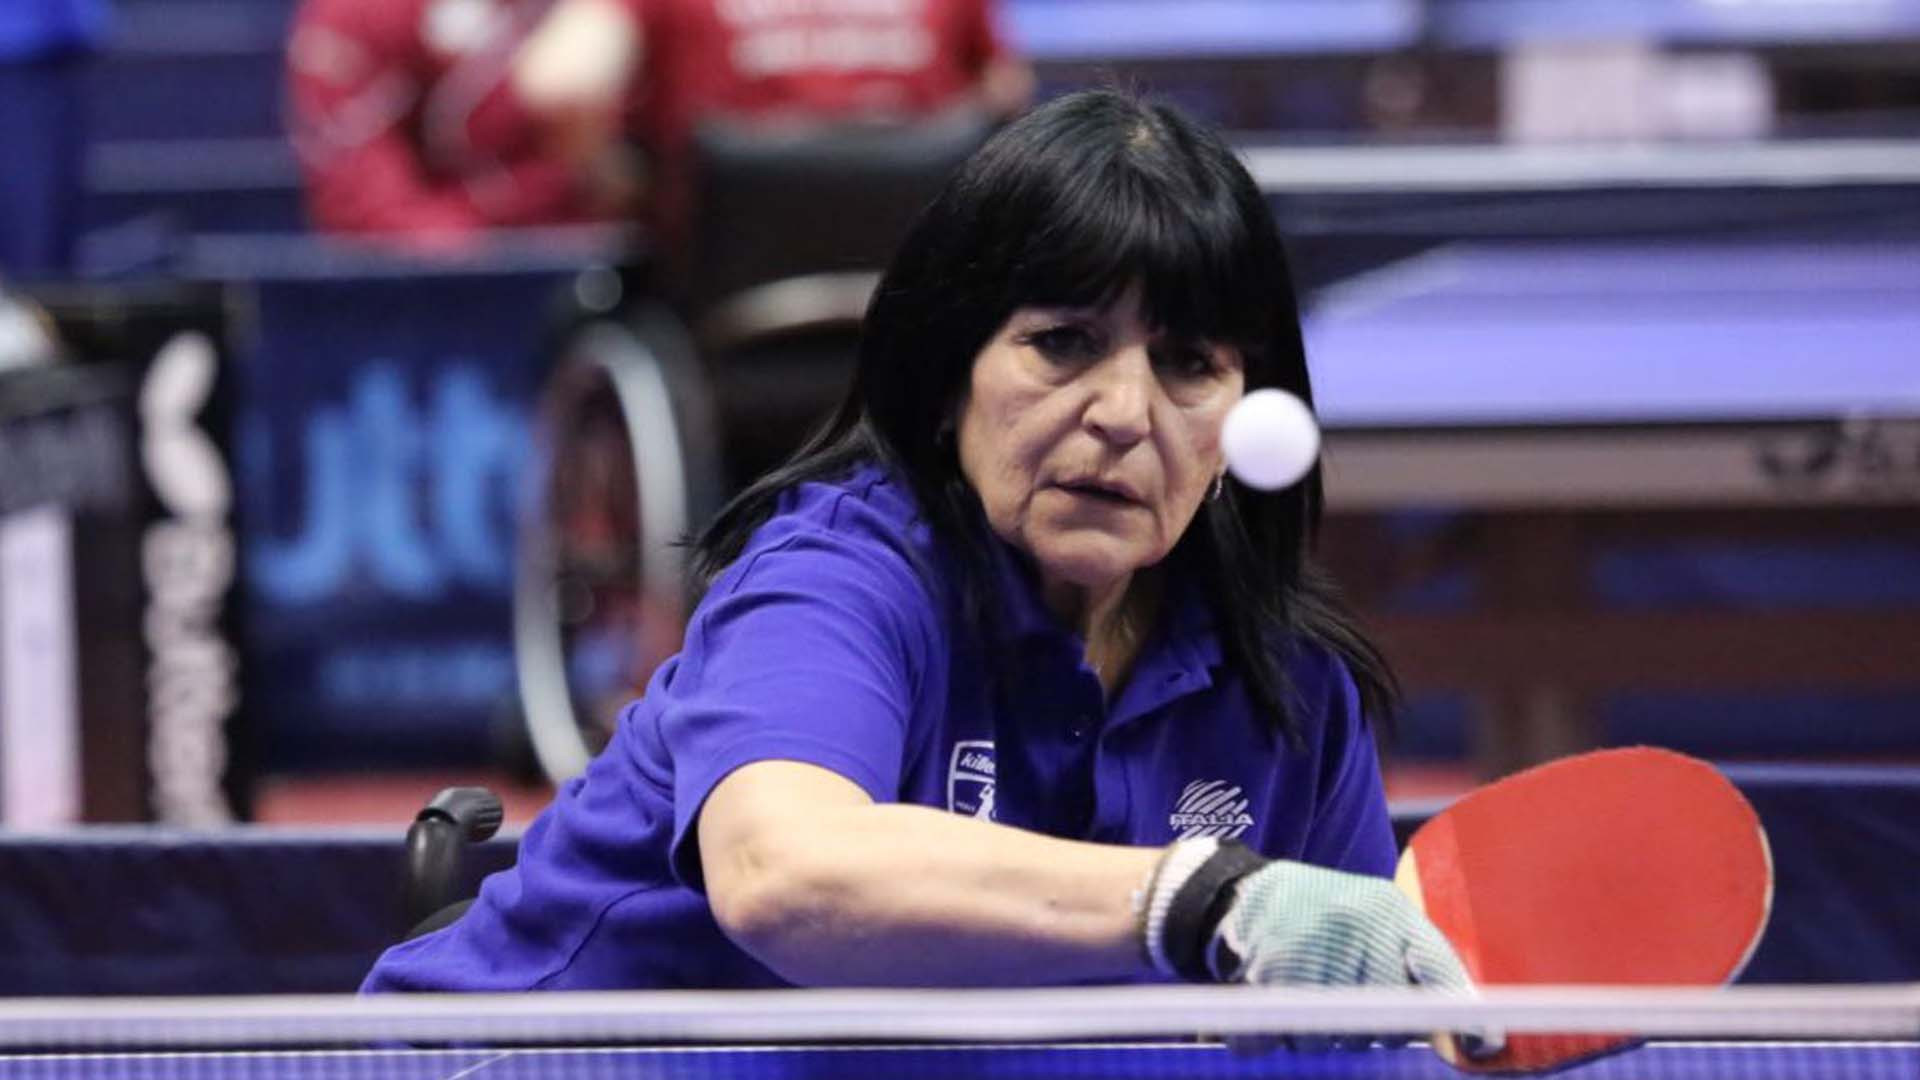 Italian Table Tennis Federation seeking umpires to officiate at 2018 Lignano Para Open